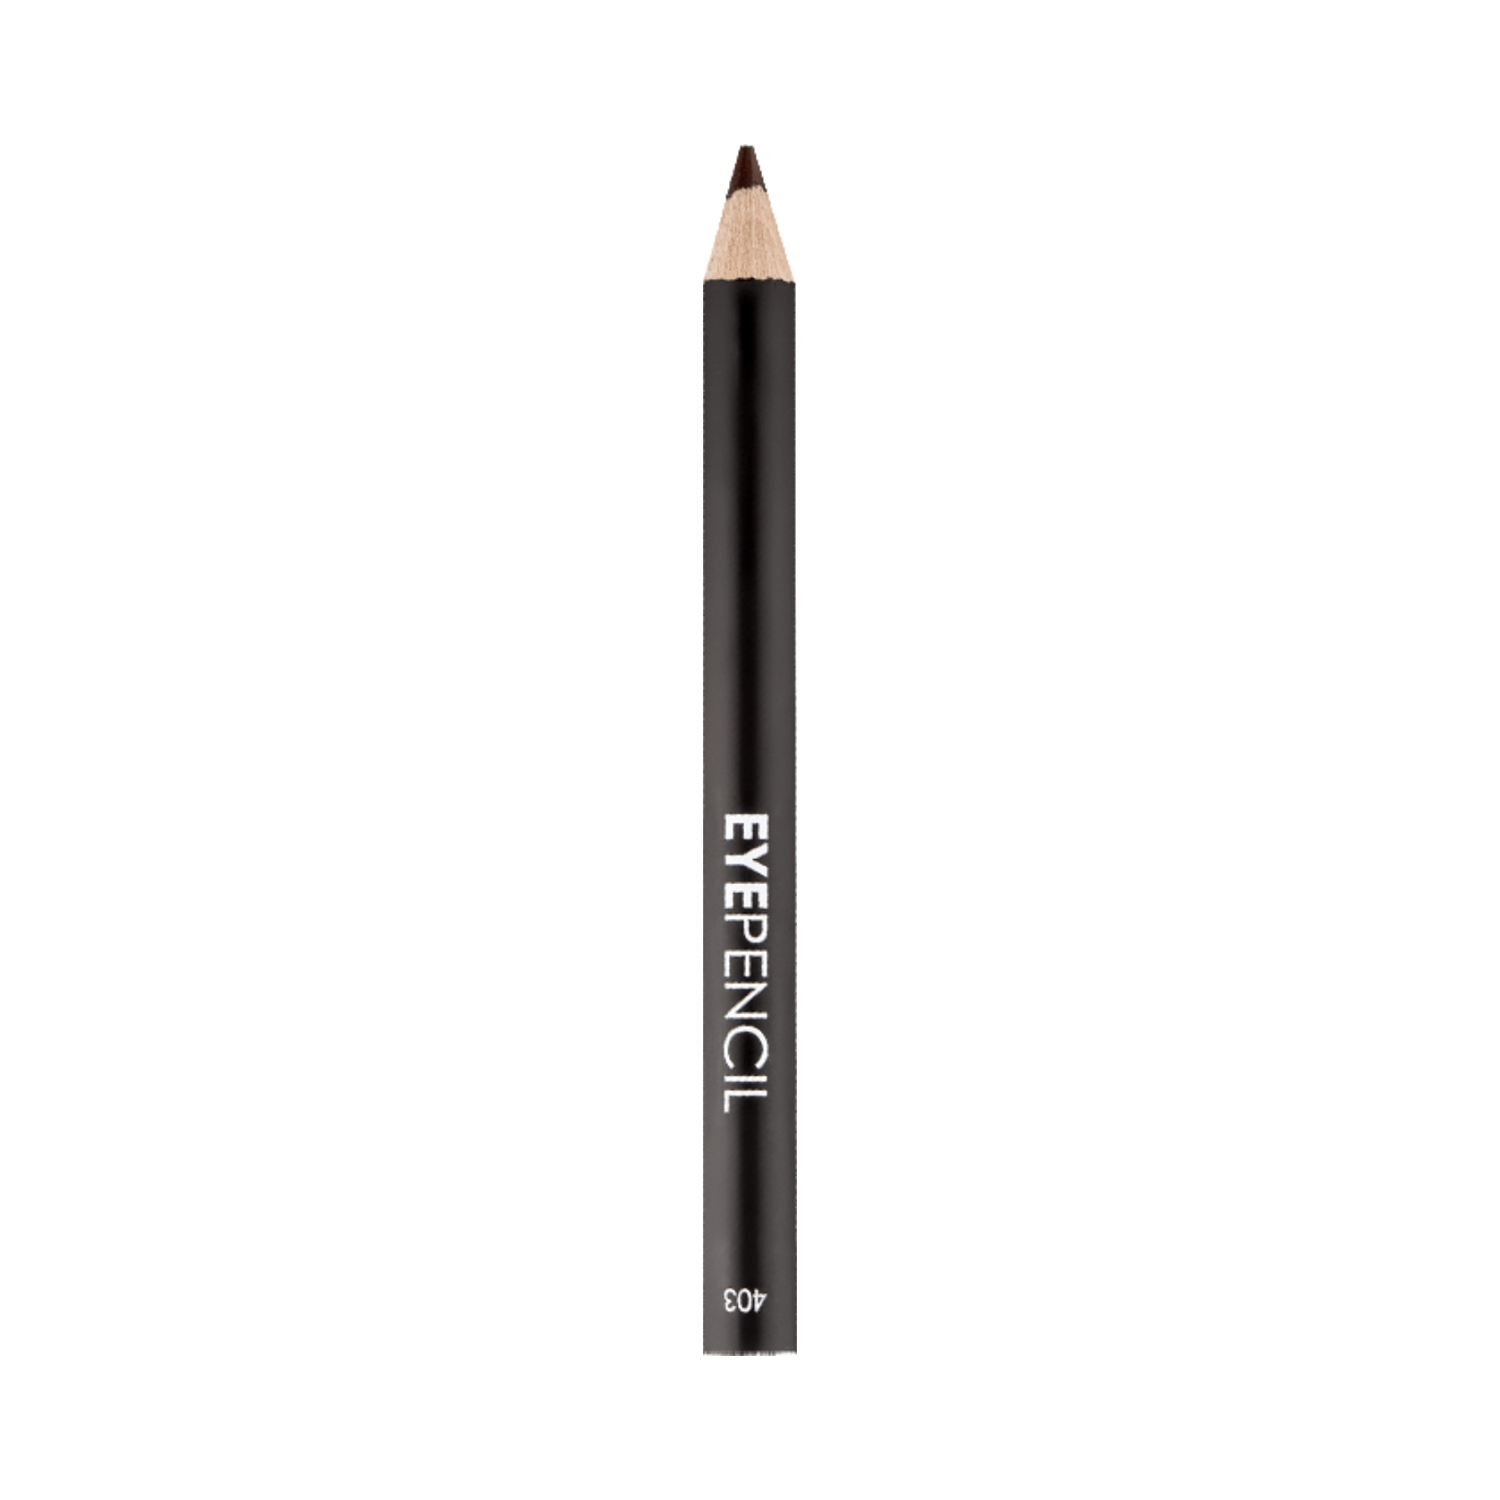 Lamel | Lamel Eye Pencil - N 403 Brown (1.7g)